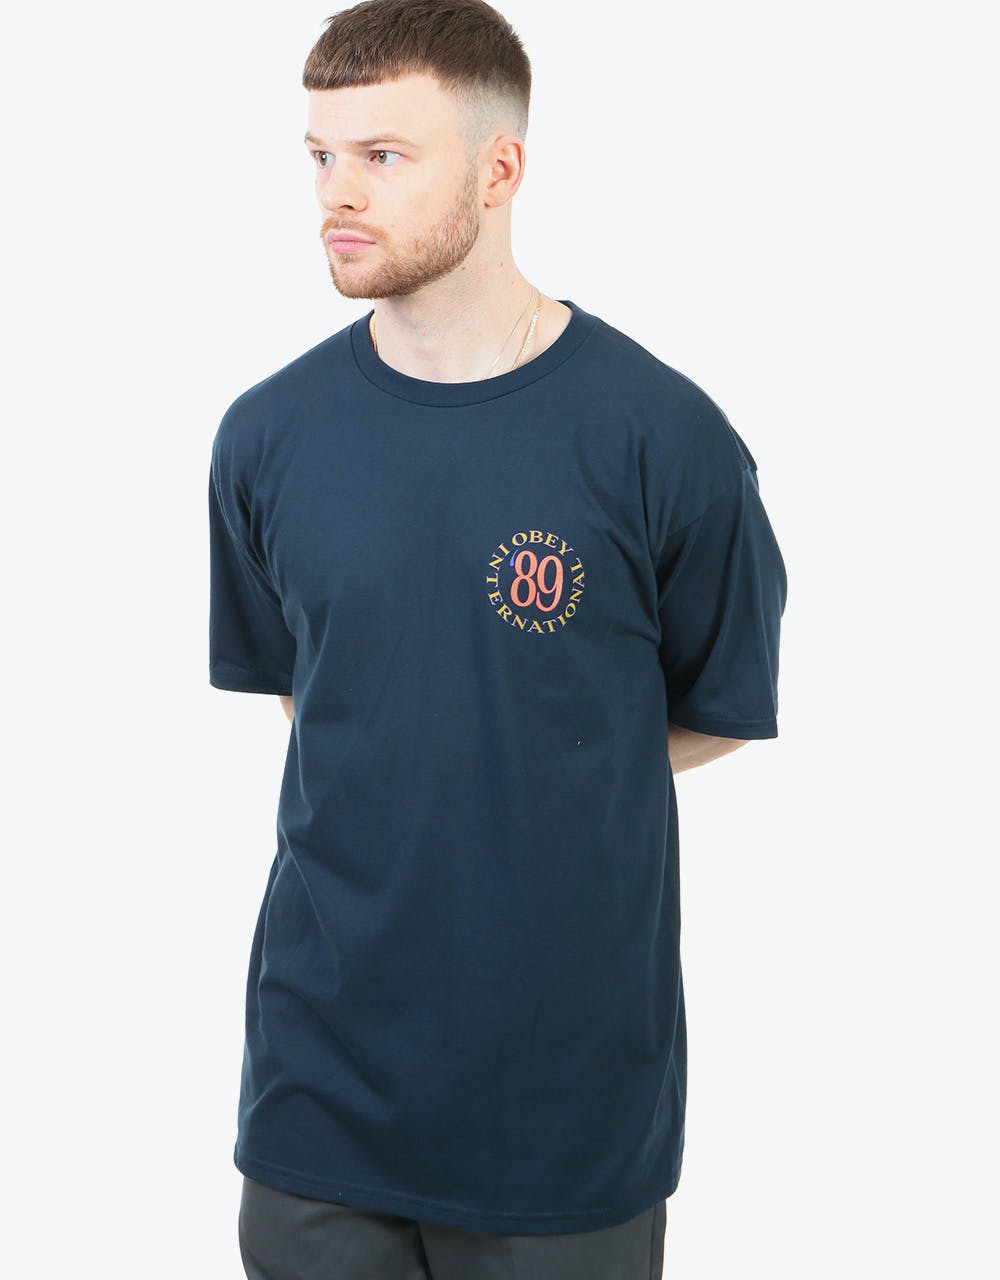 Obey International '89 T-Shirt - Navy